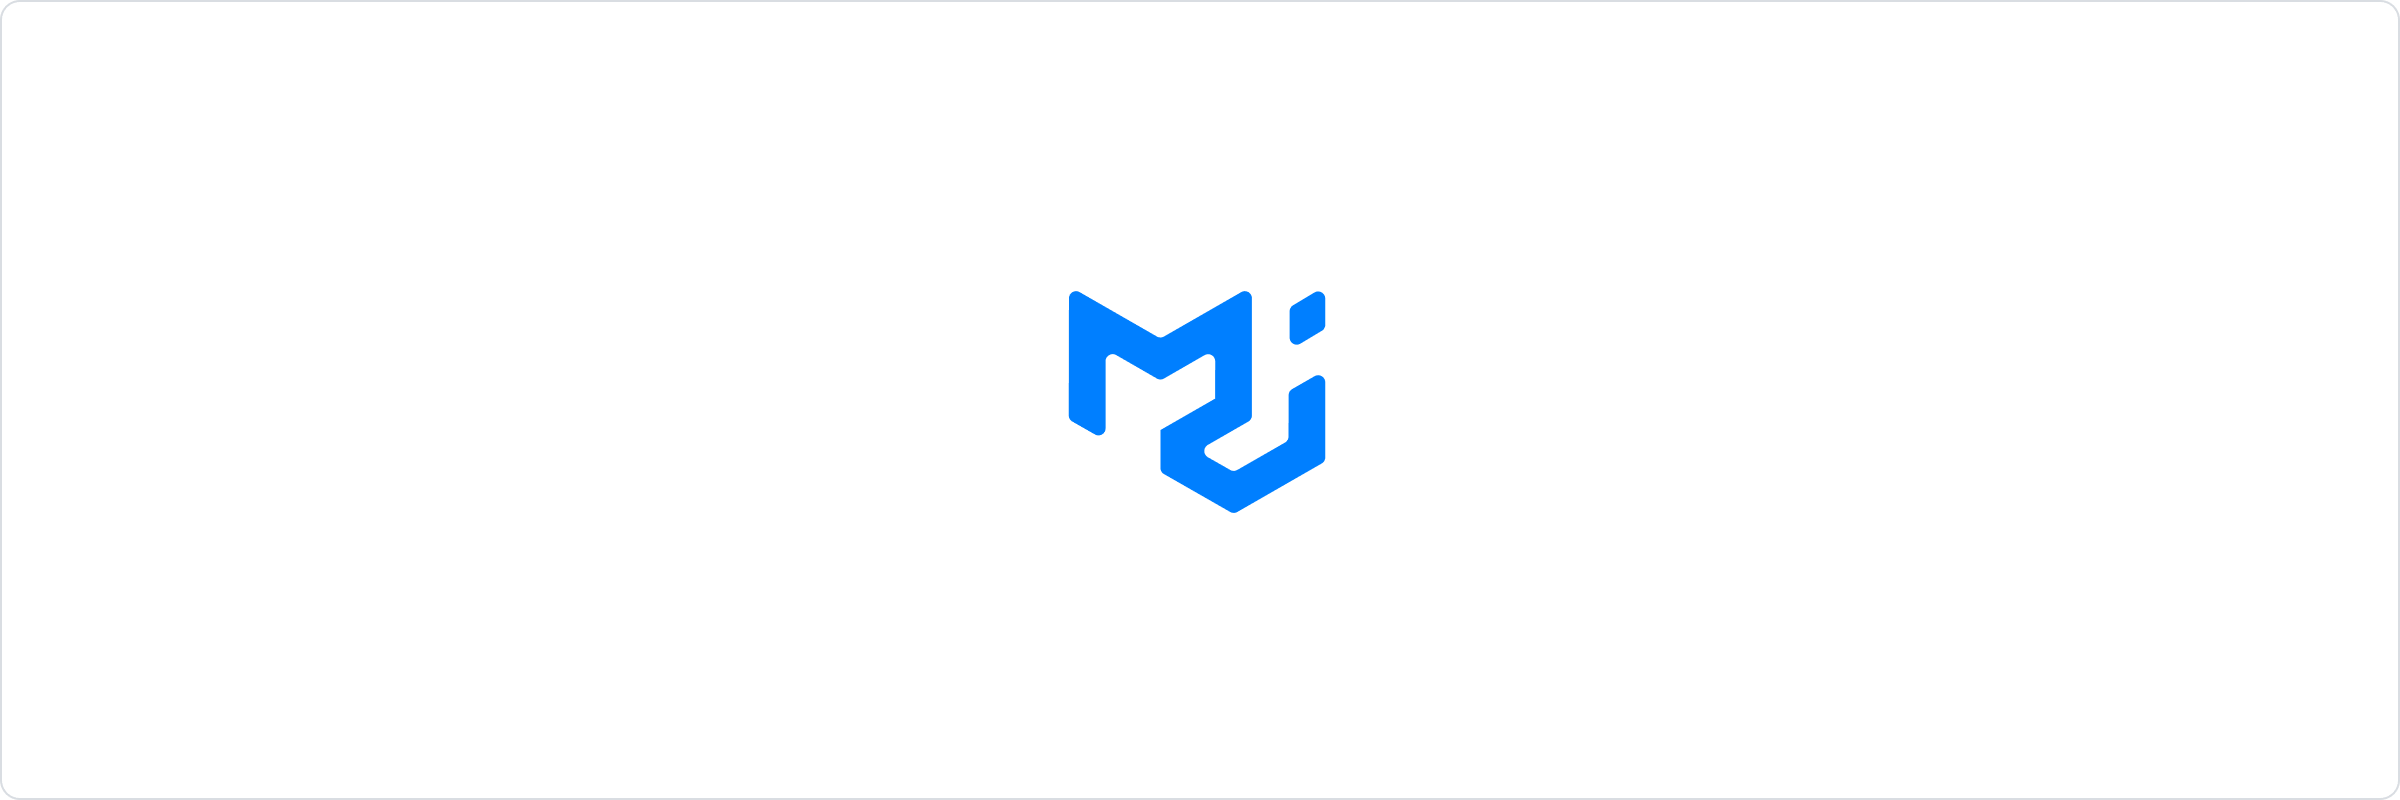 The new MUI logo